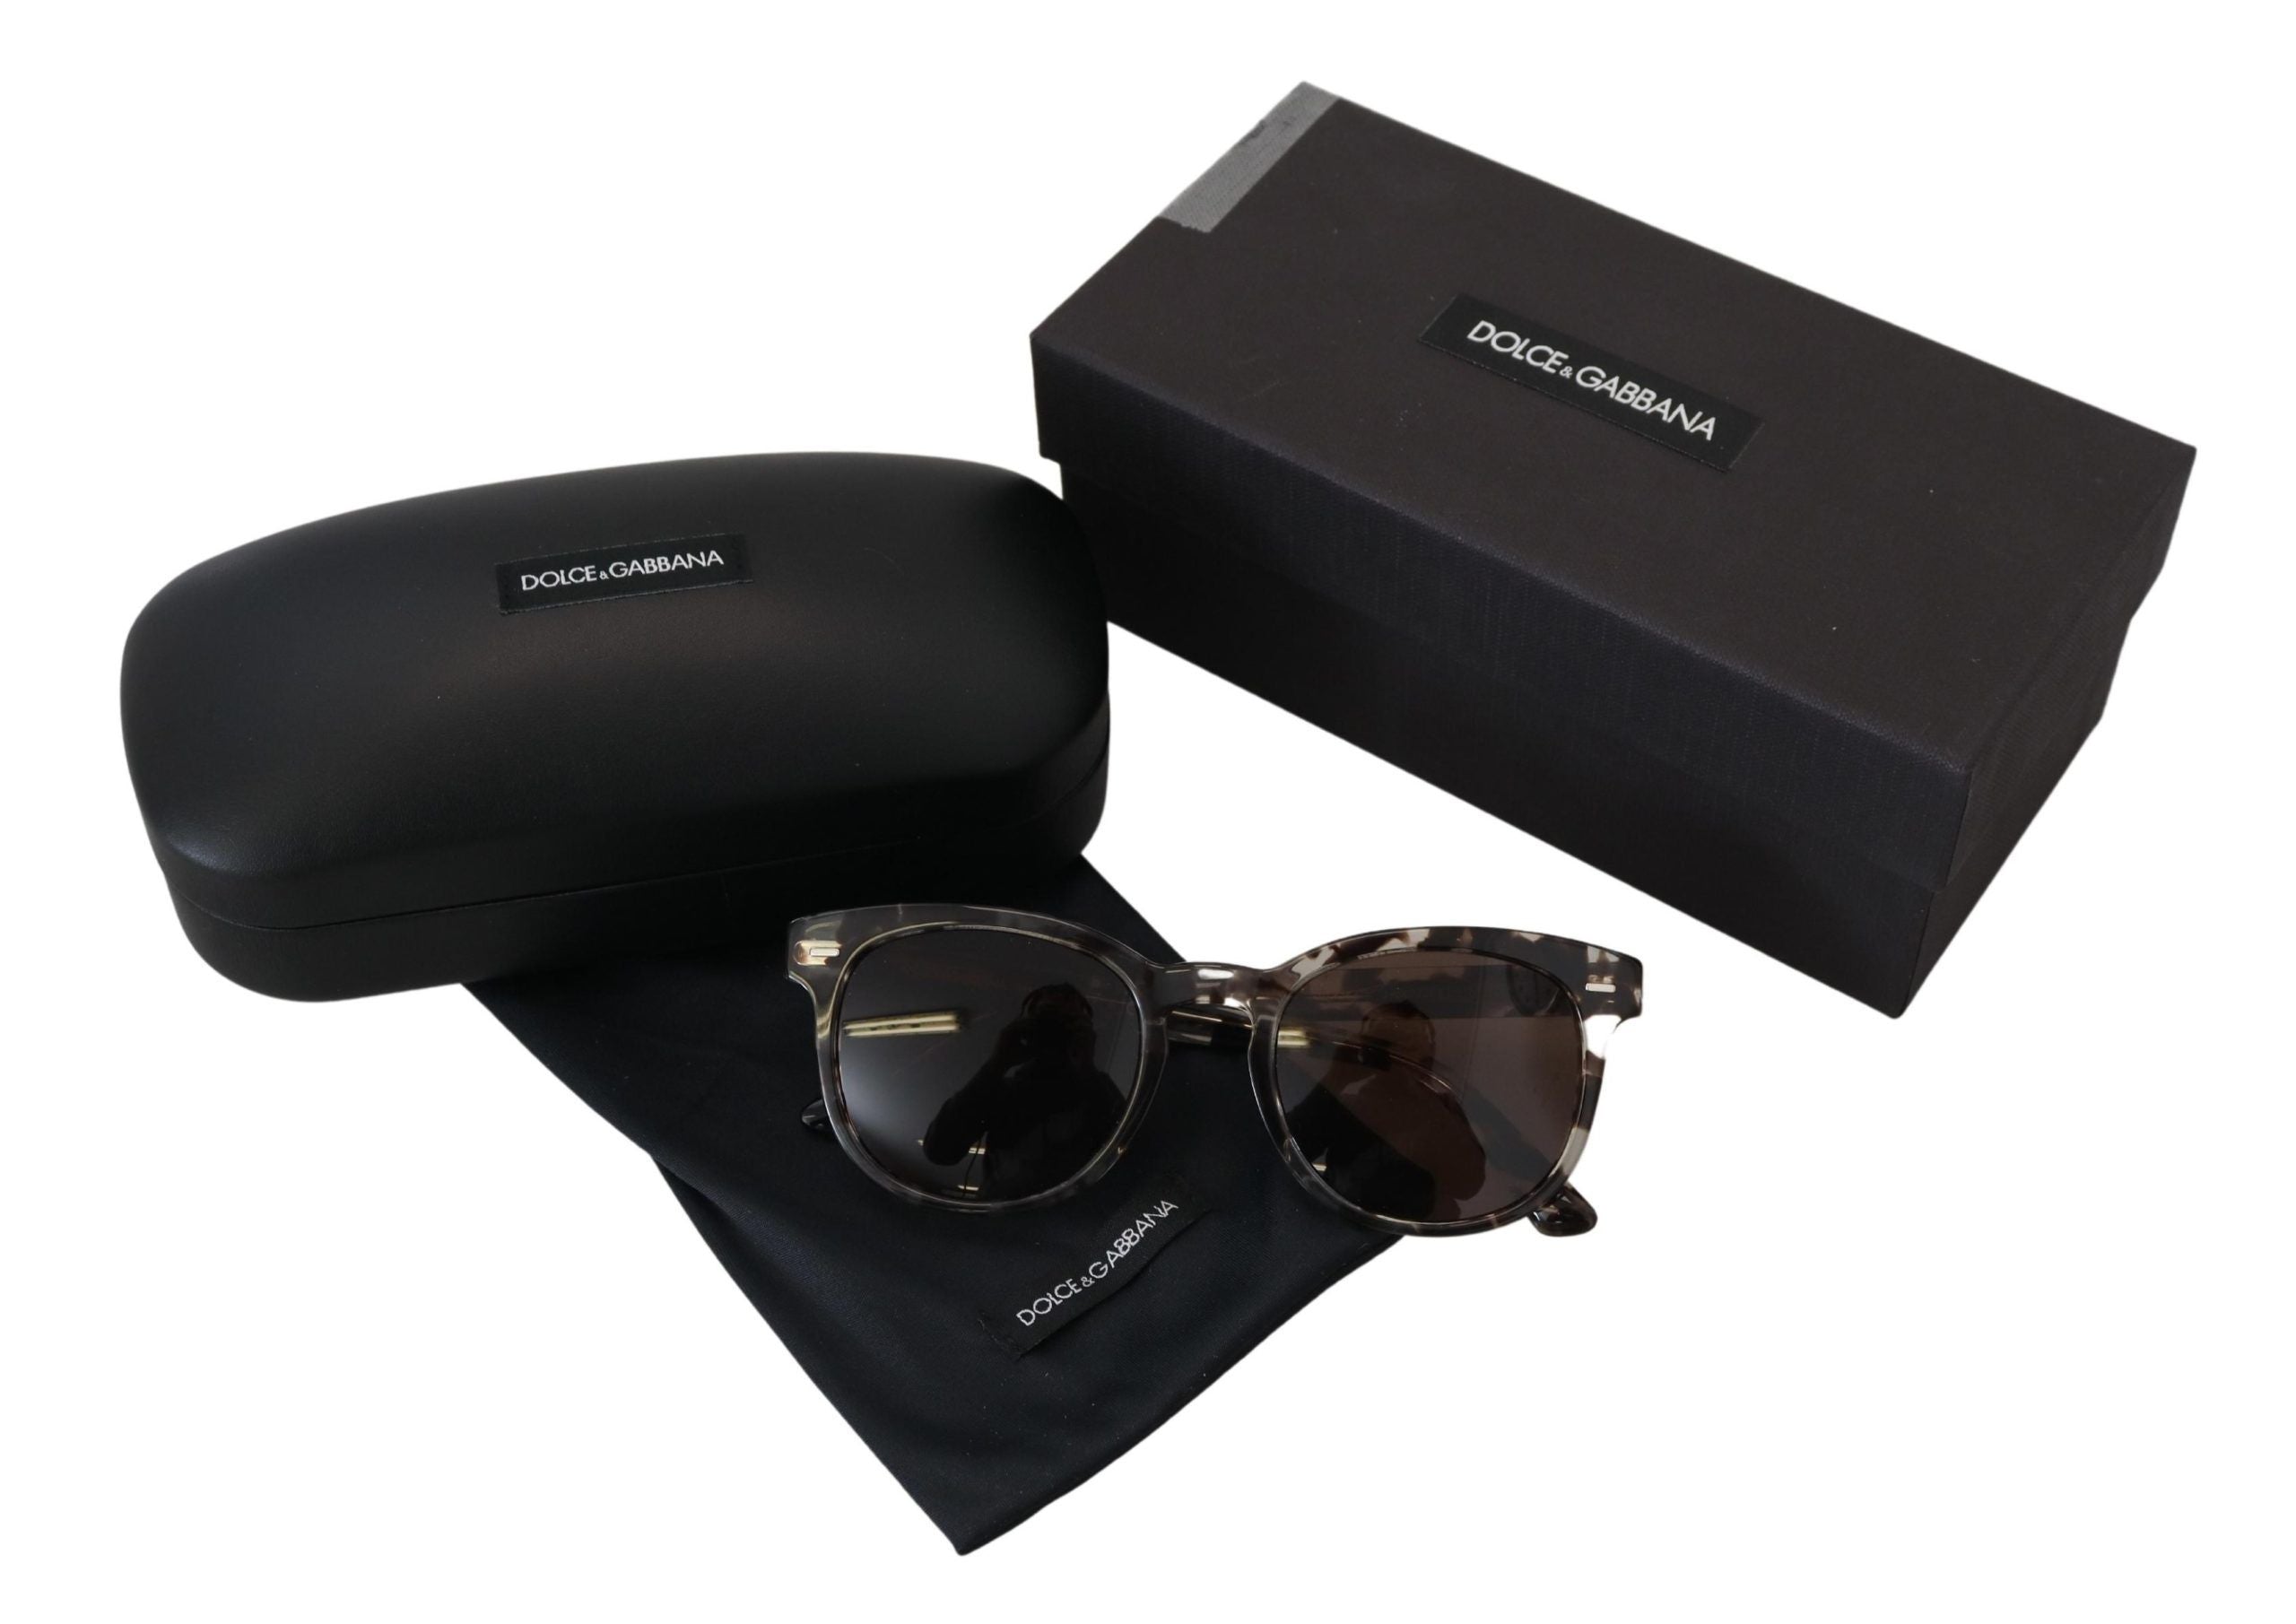 Dolce & Gabbana Chic Havana Brown Acetate Sunglasses